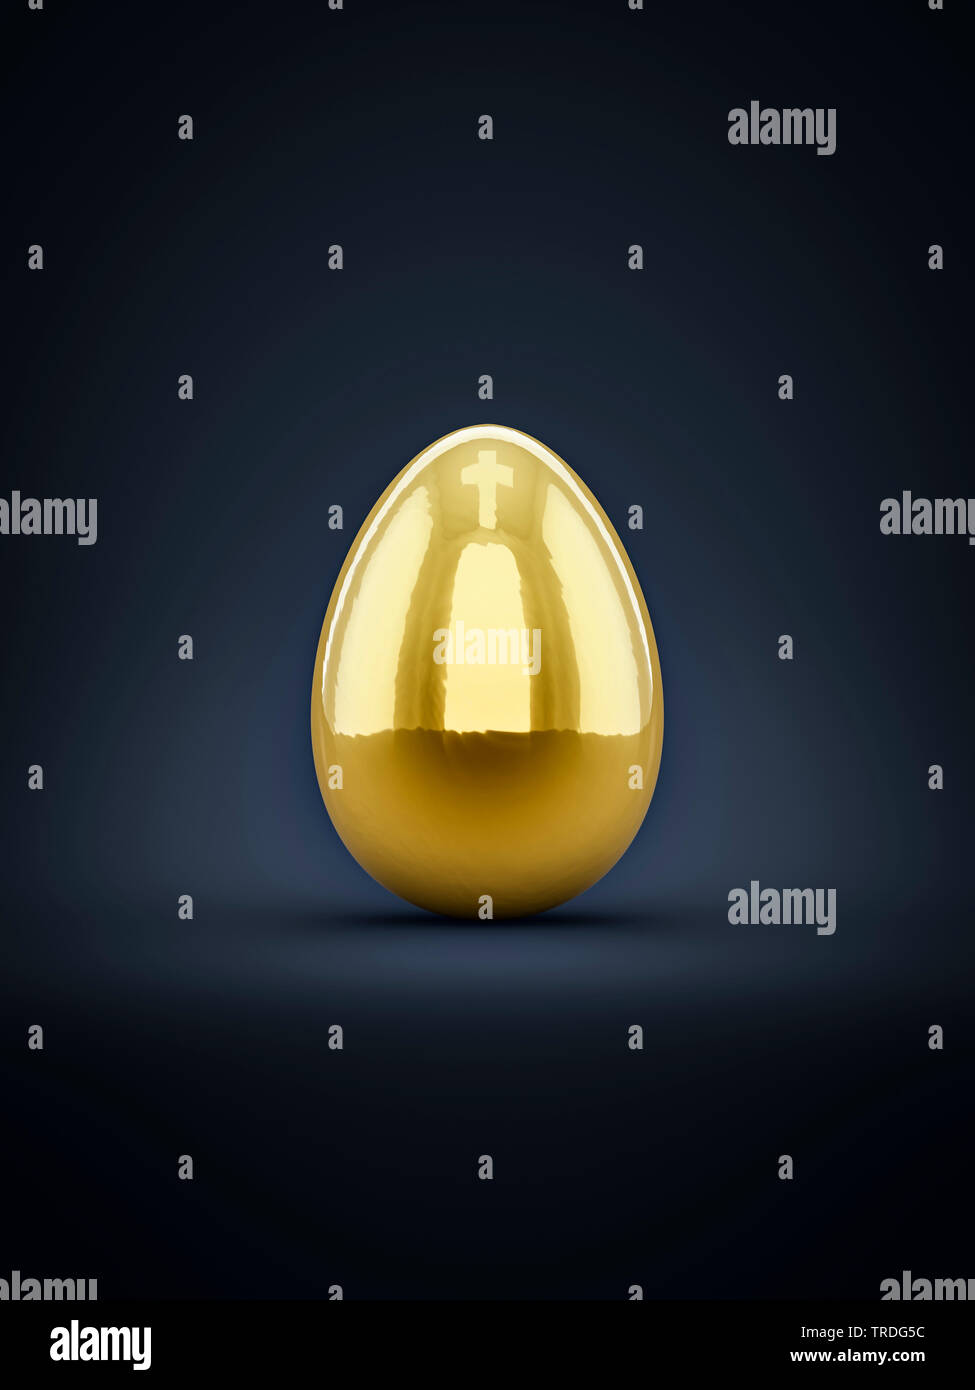 Ester card - Golden Easter egg against black background Stock Photo - Alamy